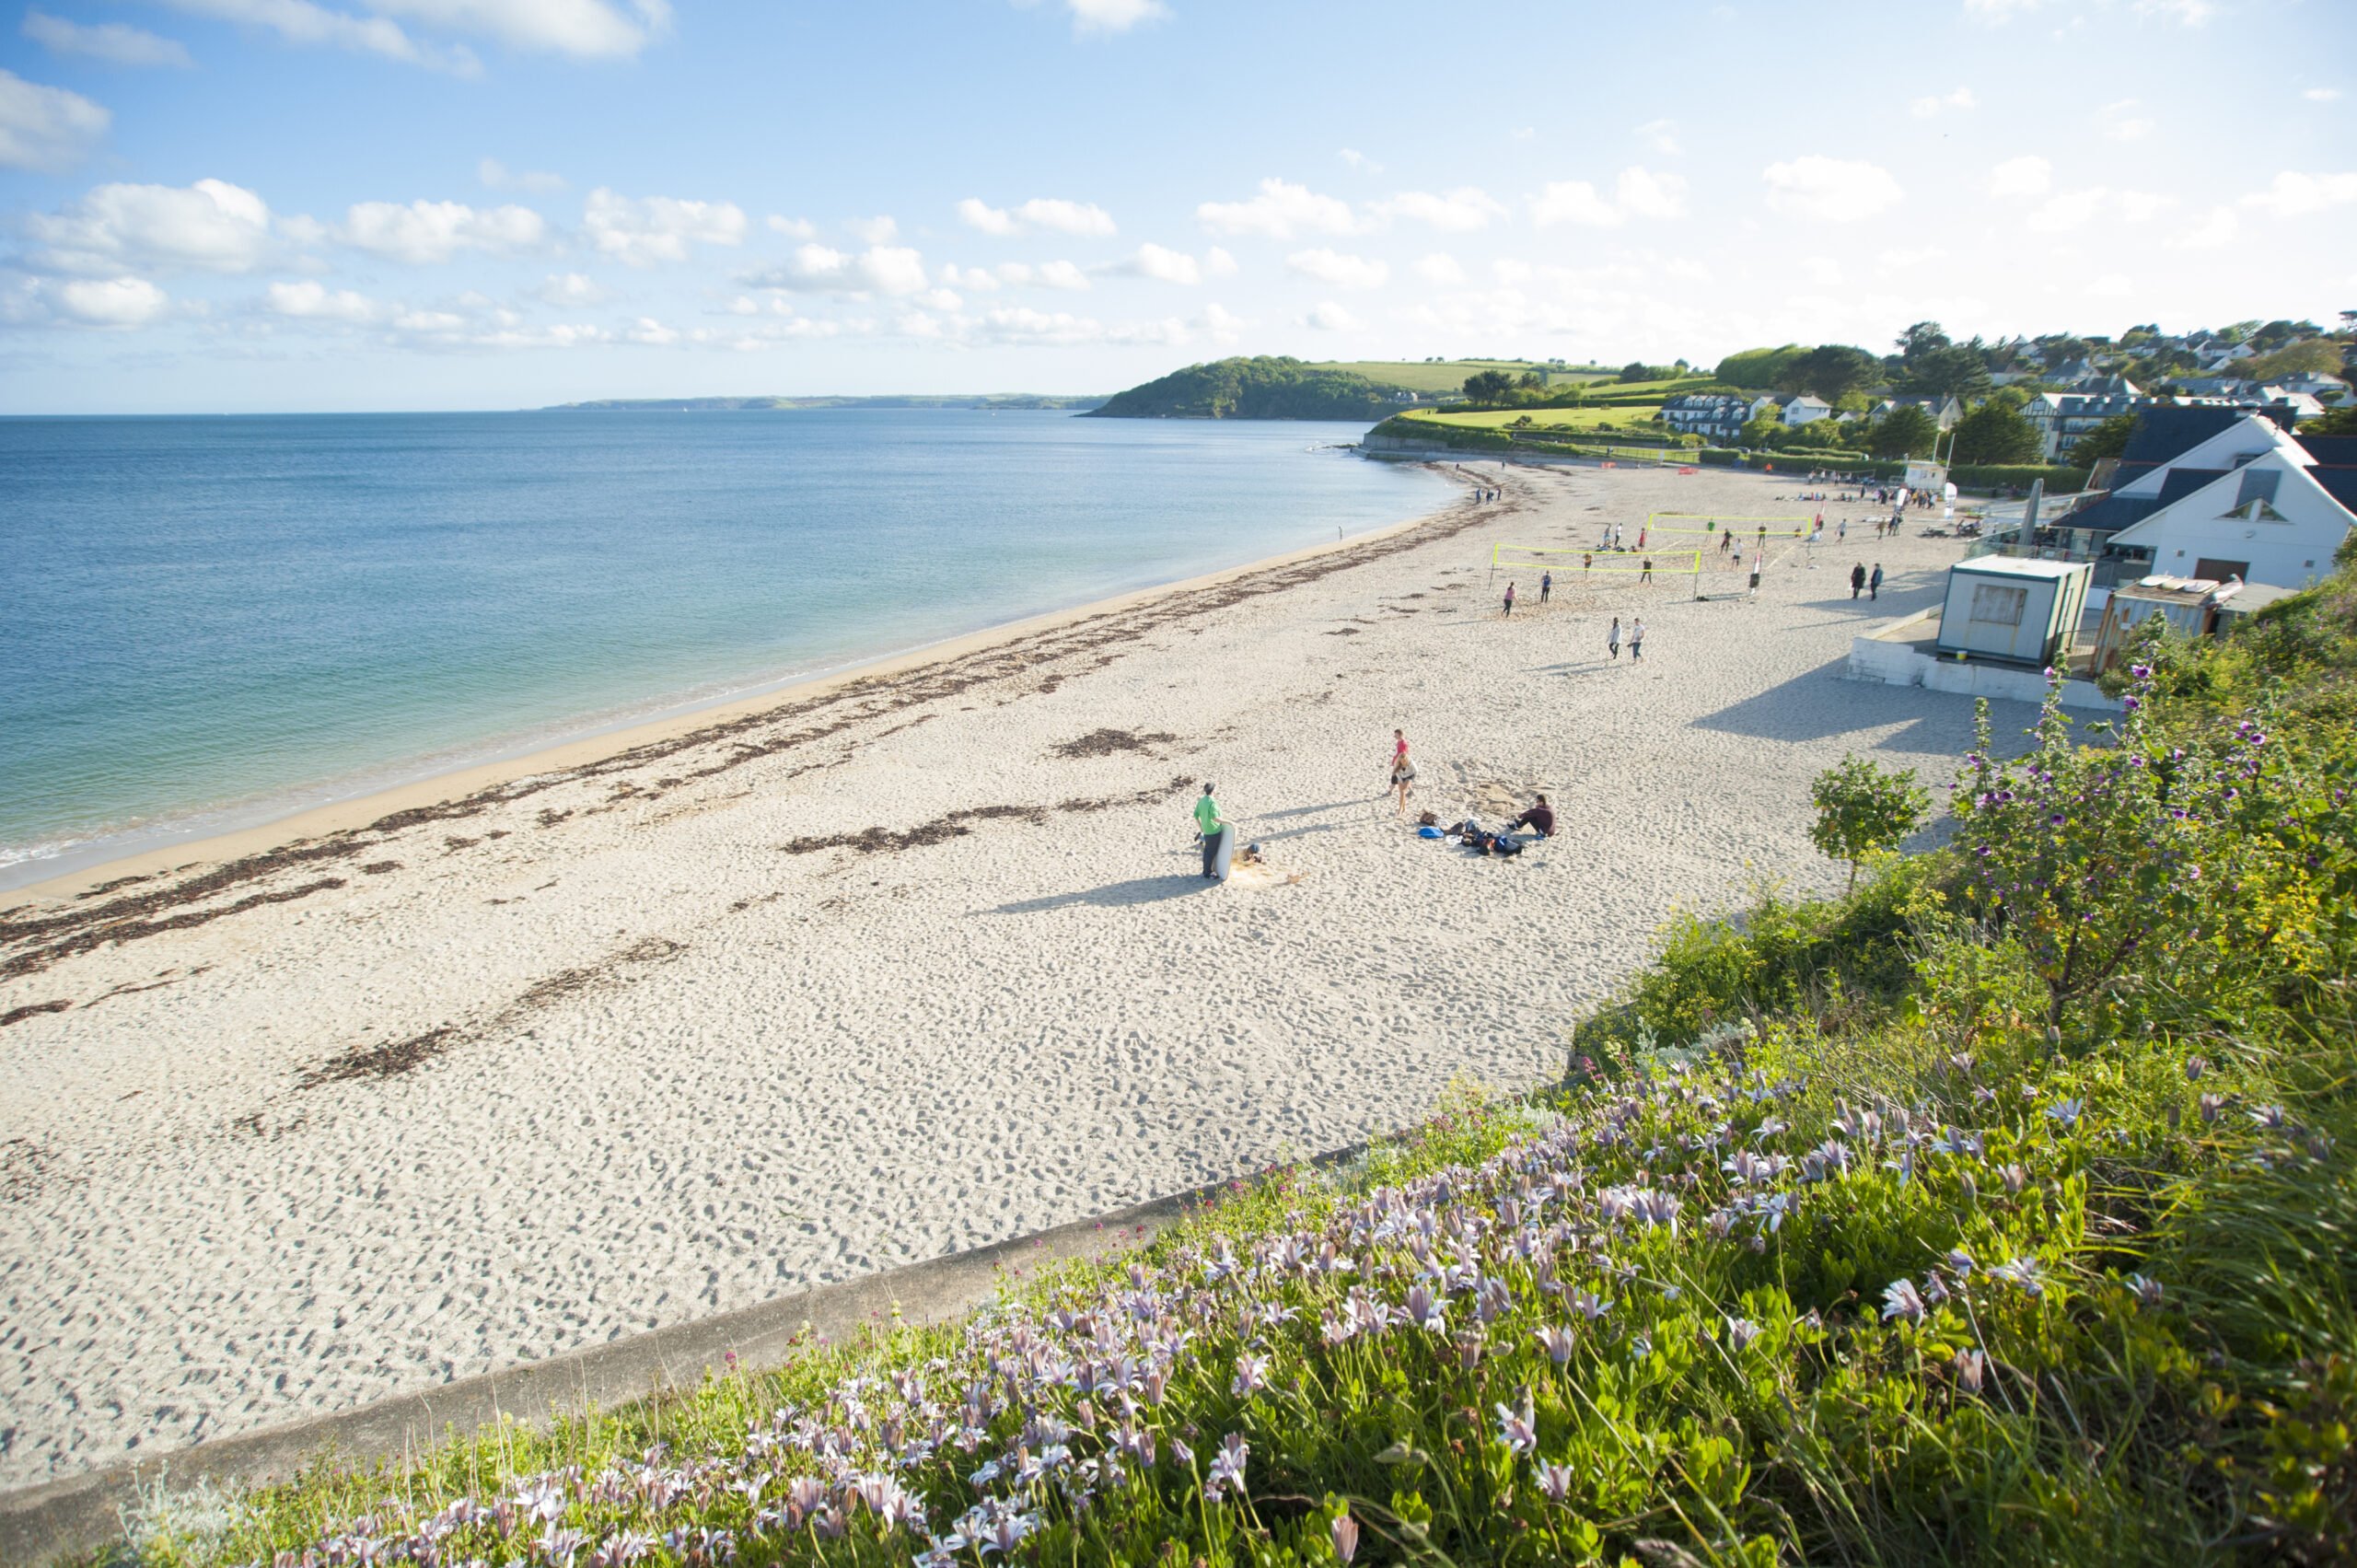 Cornish beaches: Gyllyngvase Beach